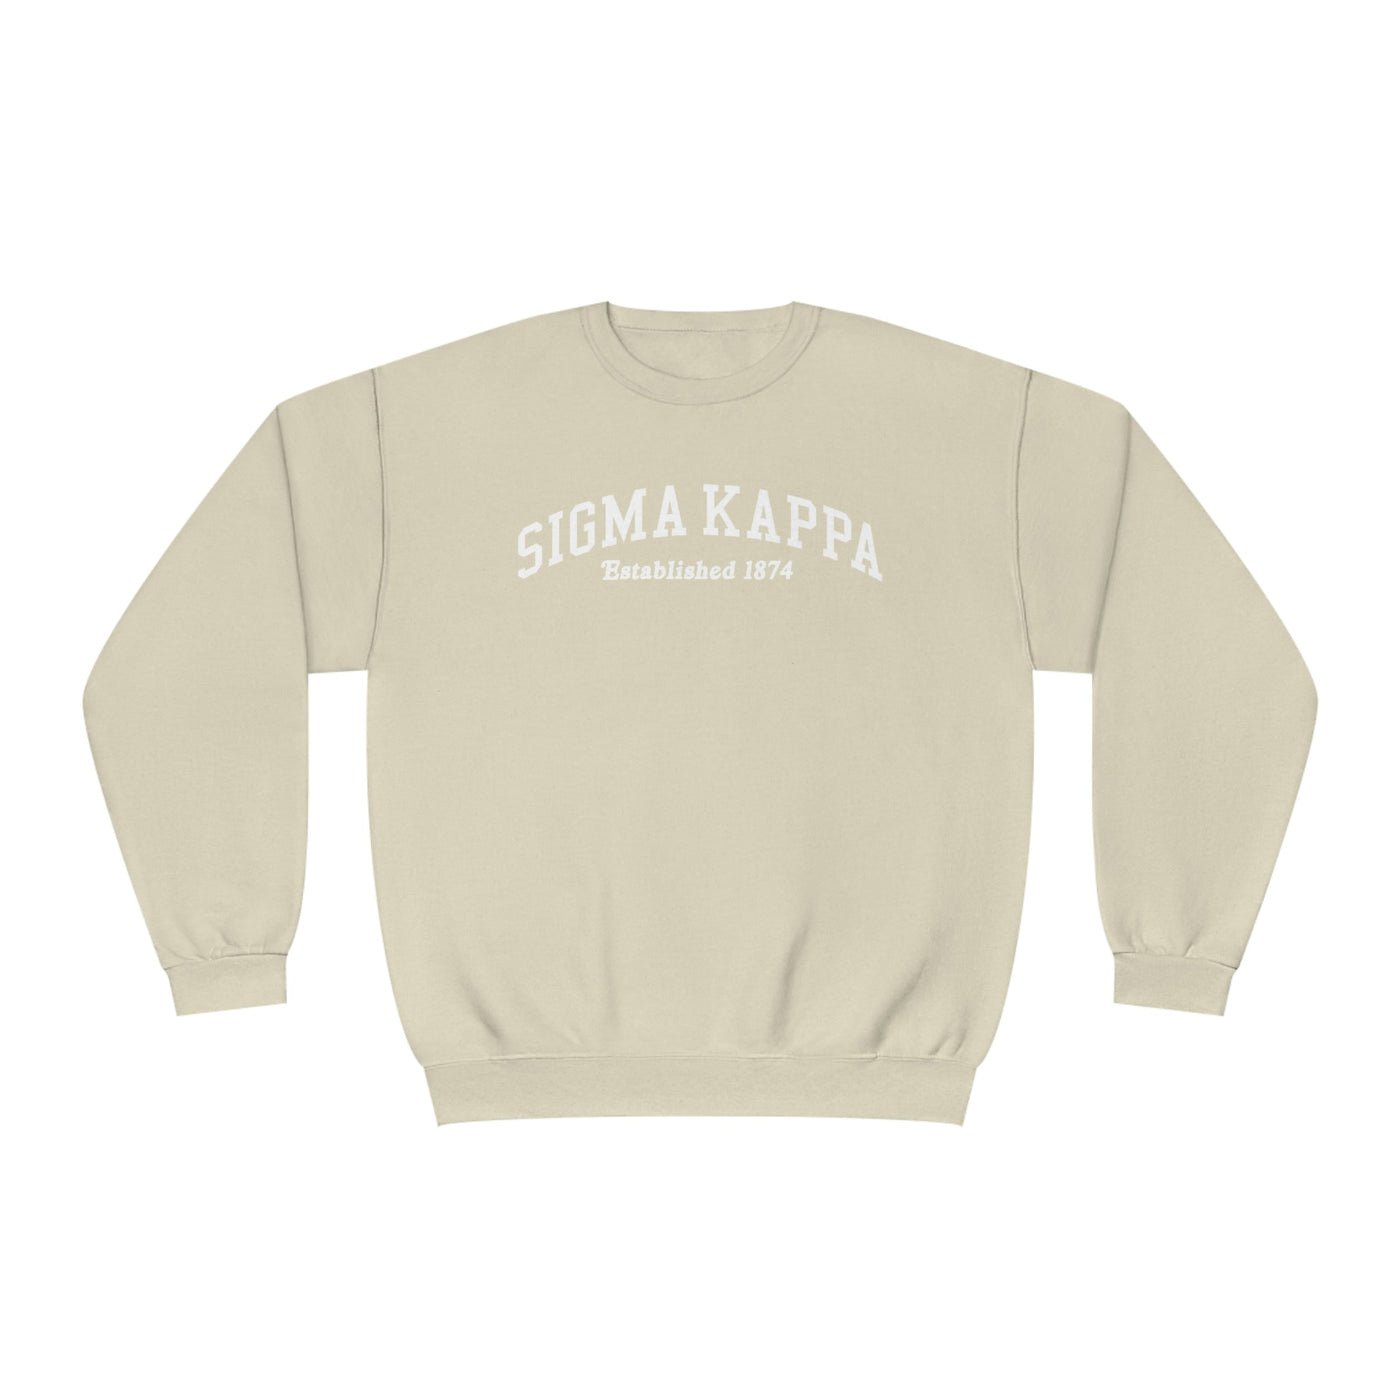 Sigma Kappa Sorority Varsity College Sigma Kappa Crewneck Sweatshirt